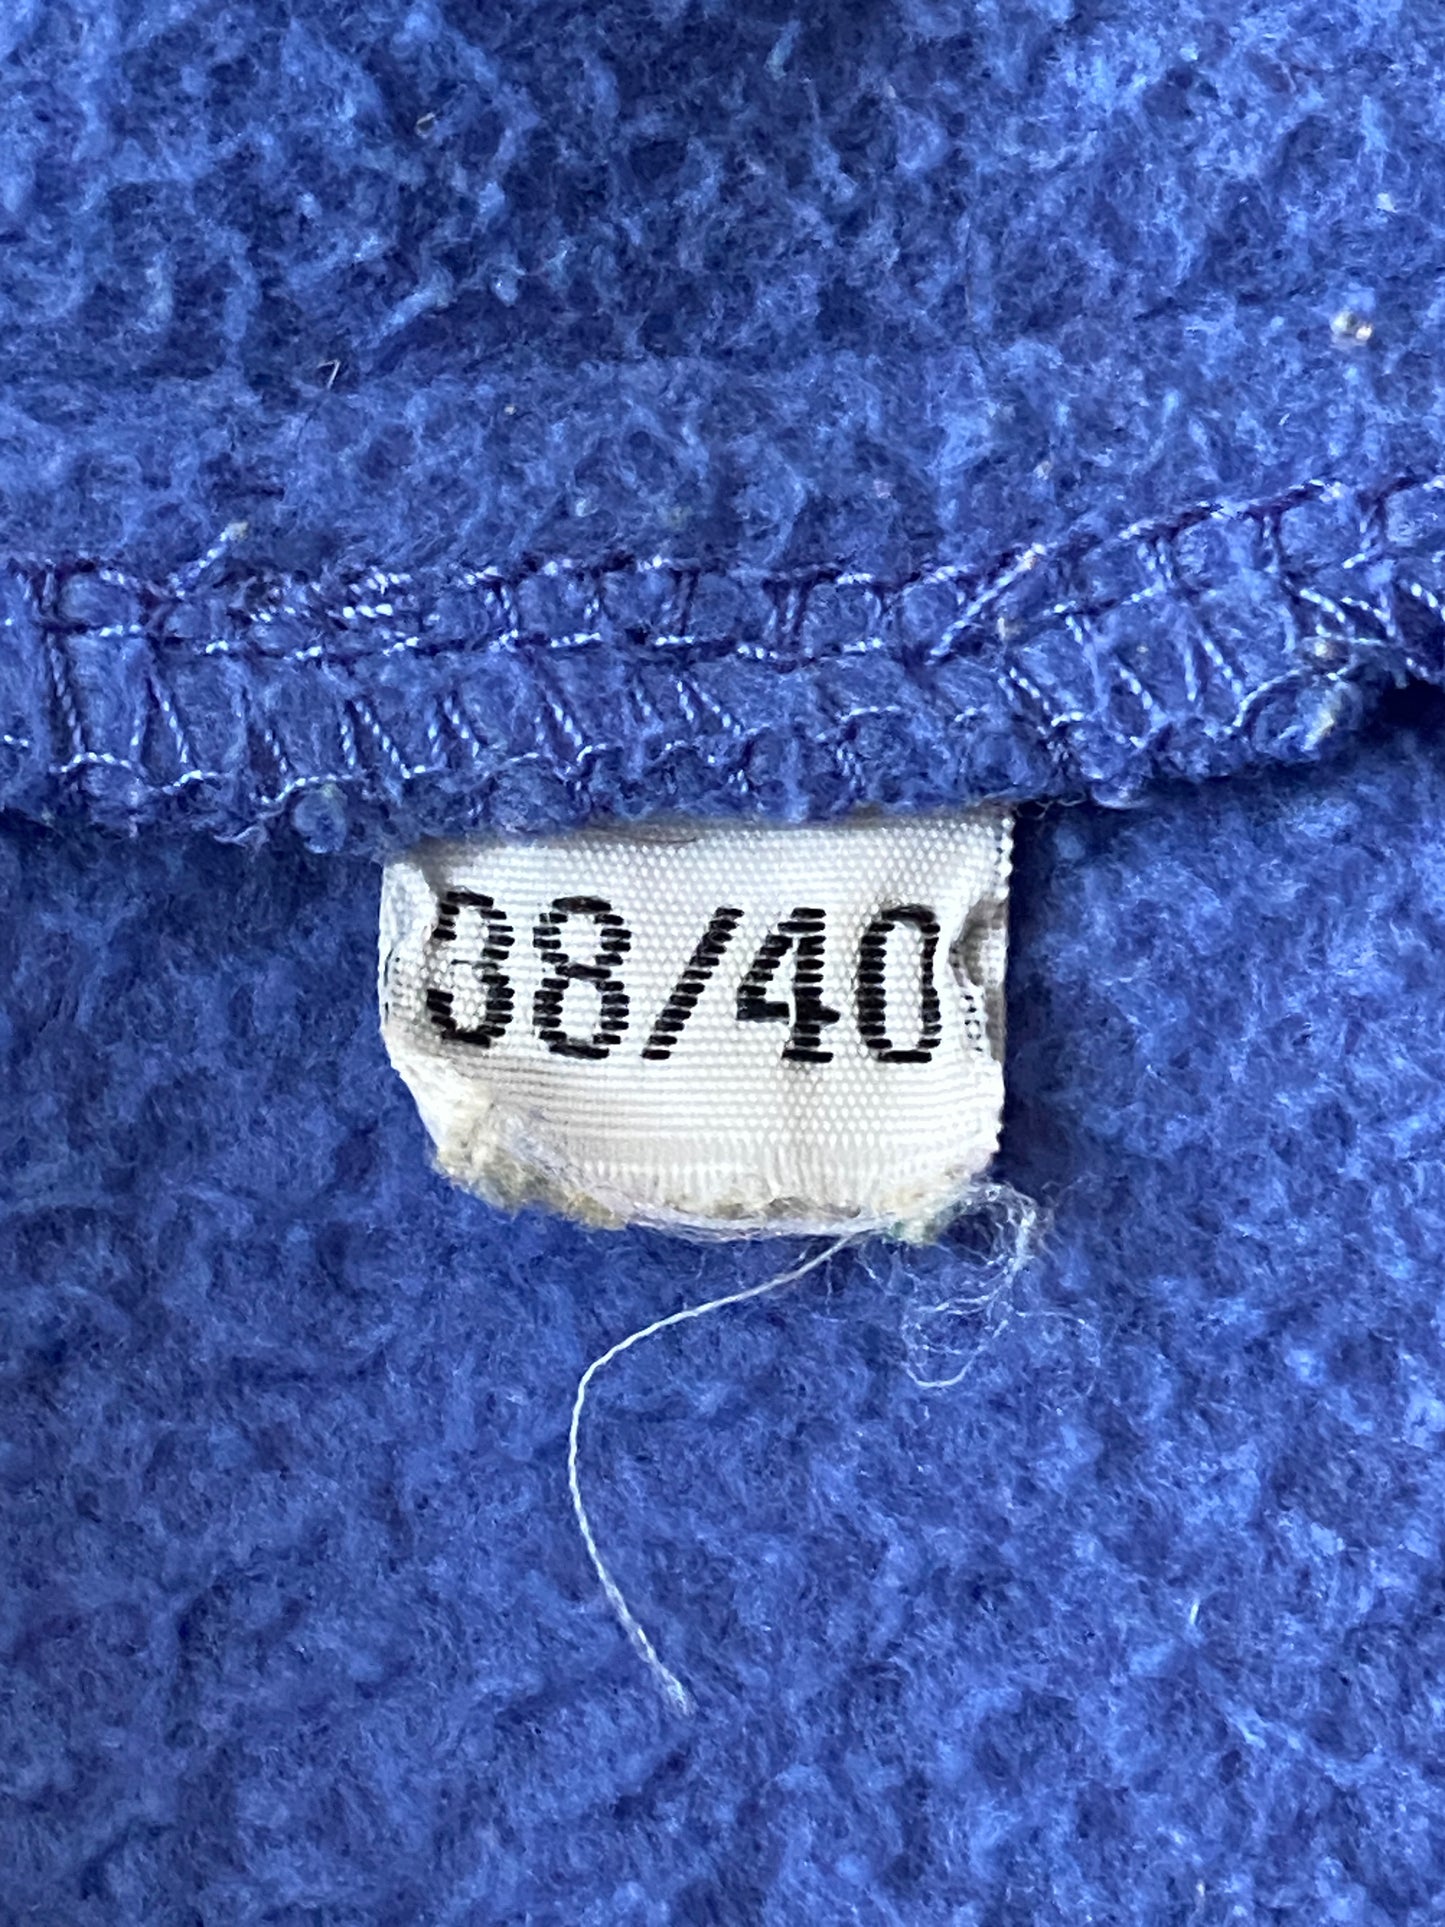 90s Vintage Men's Abstract Quarter Zip Fleece - Medium Blue Polyester